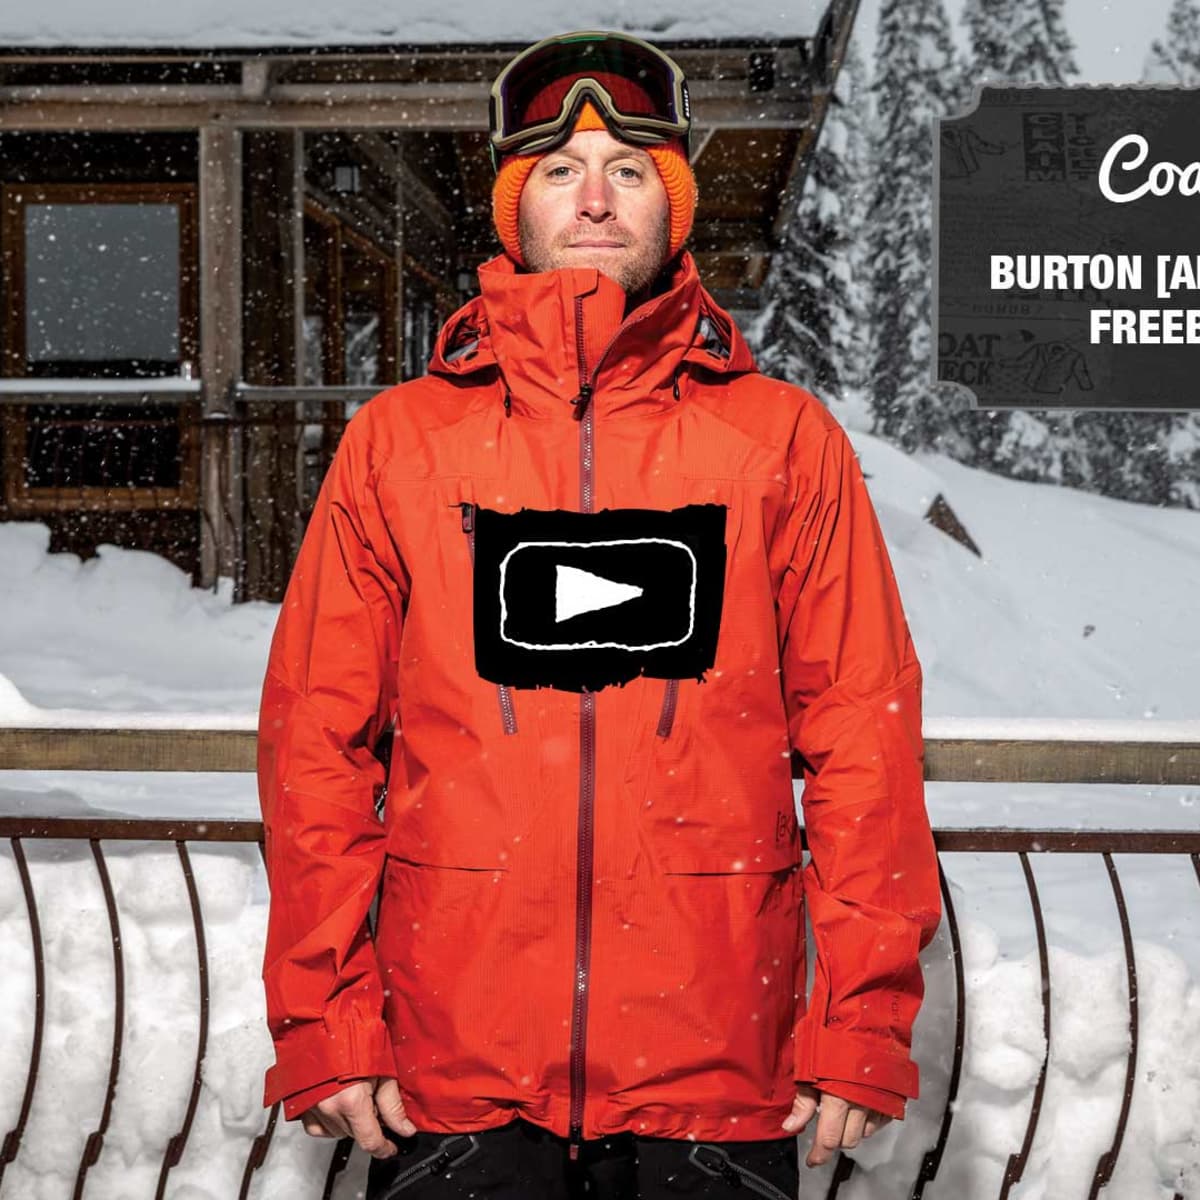 The Coat Check 2019—The Burton [AK] GORE-TEX Freebird Jacket 